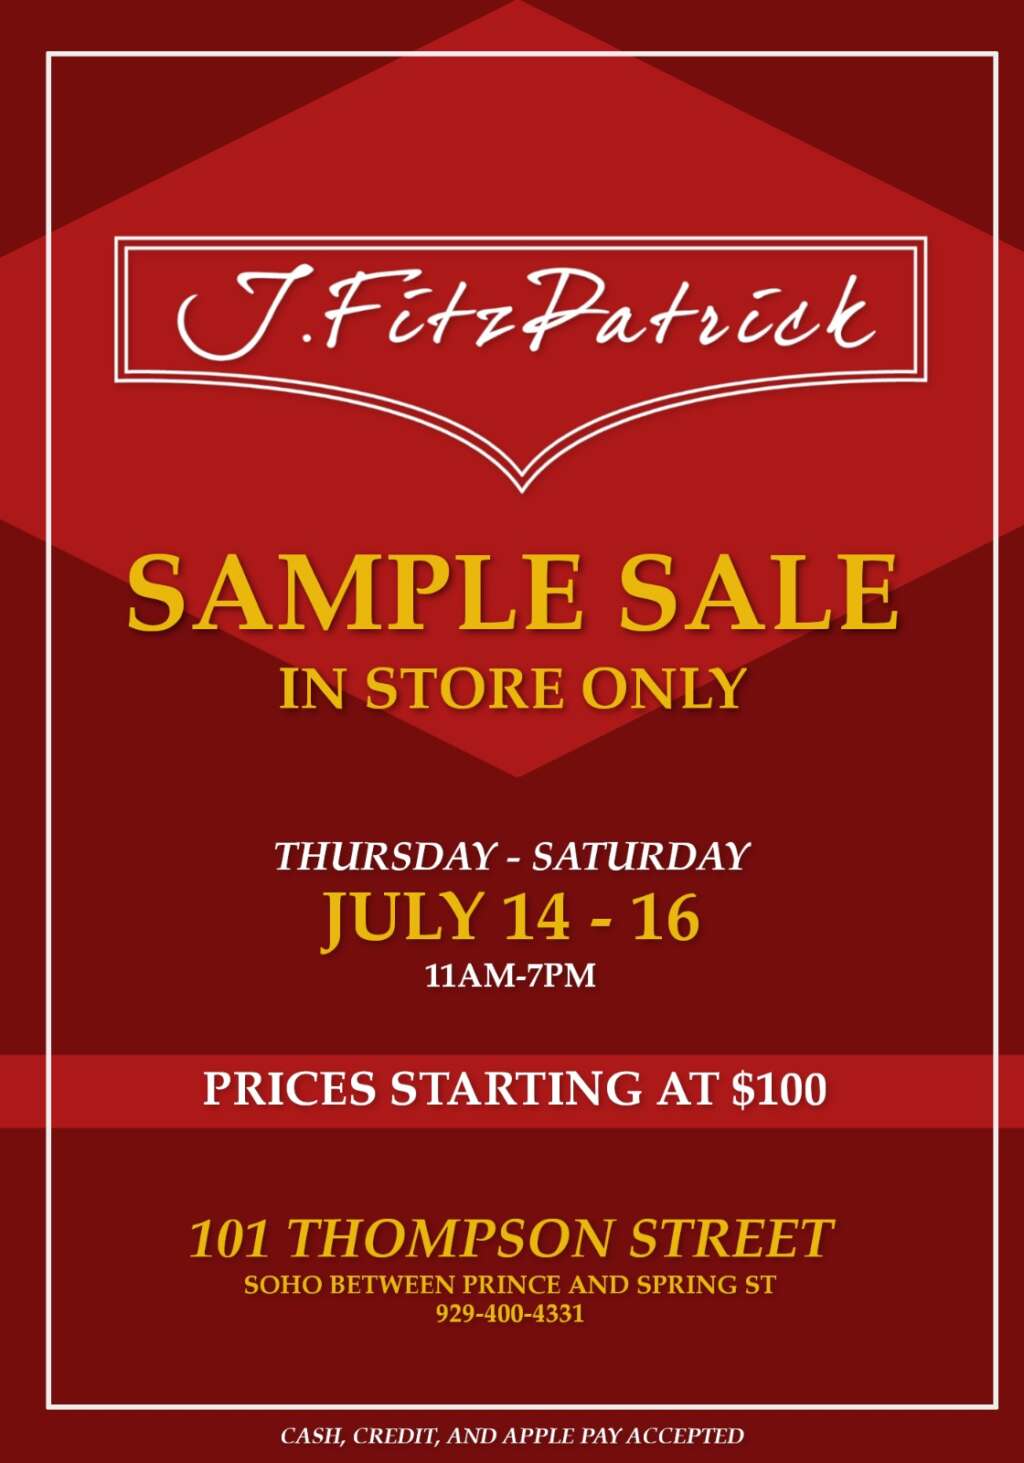 J.FitzPatrick Sample Sale